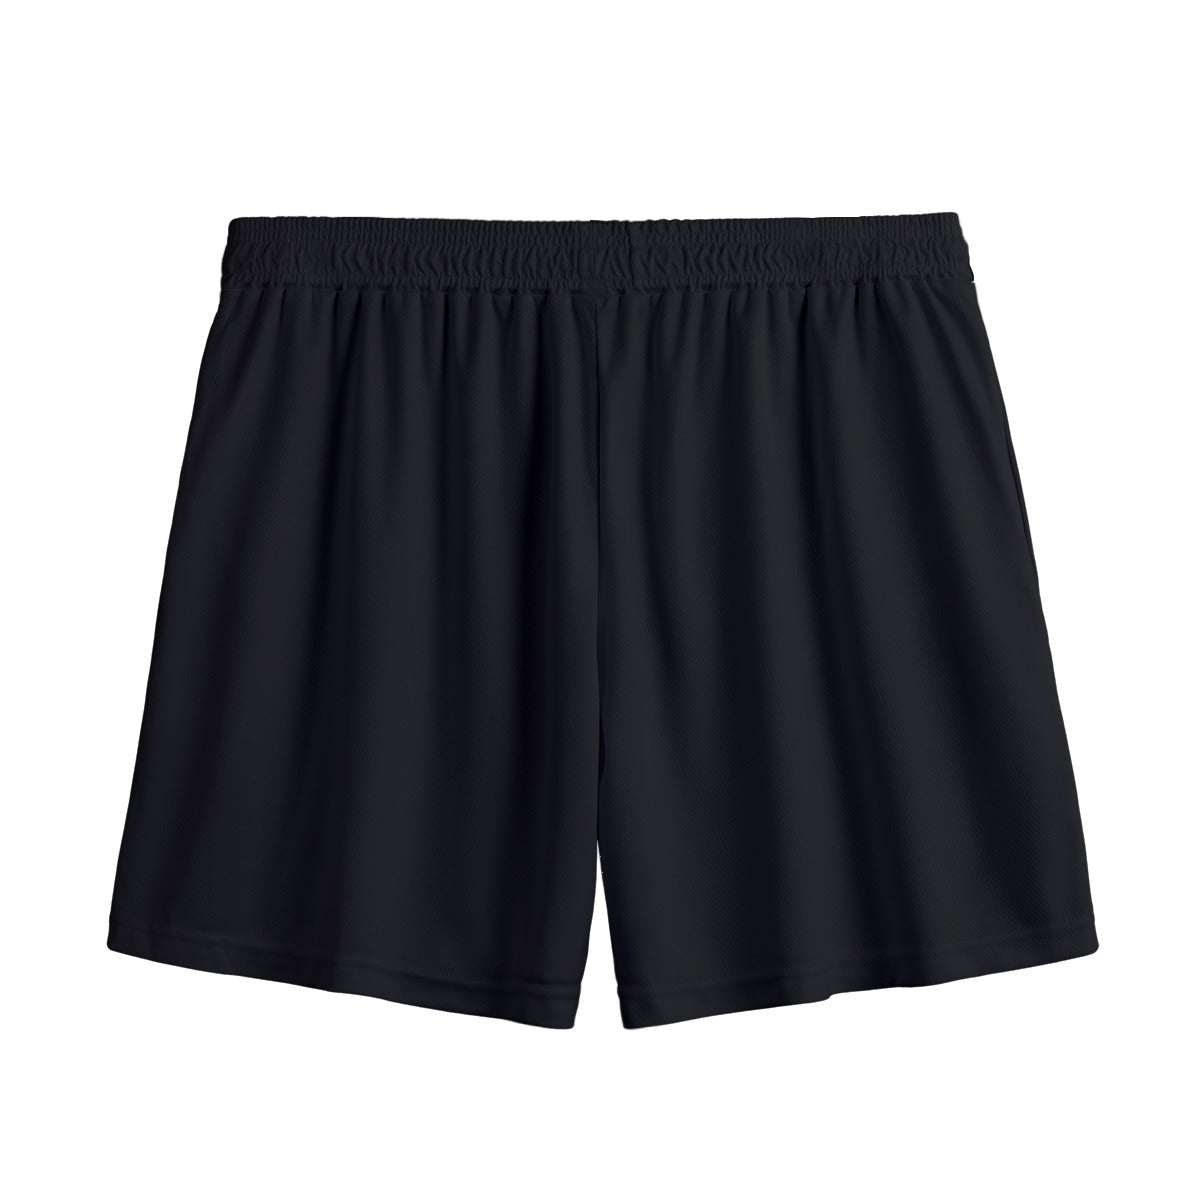 HZ - Basic Black Shorts